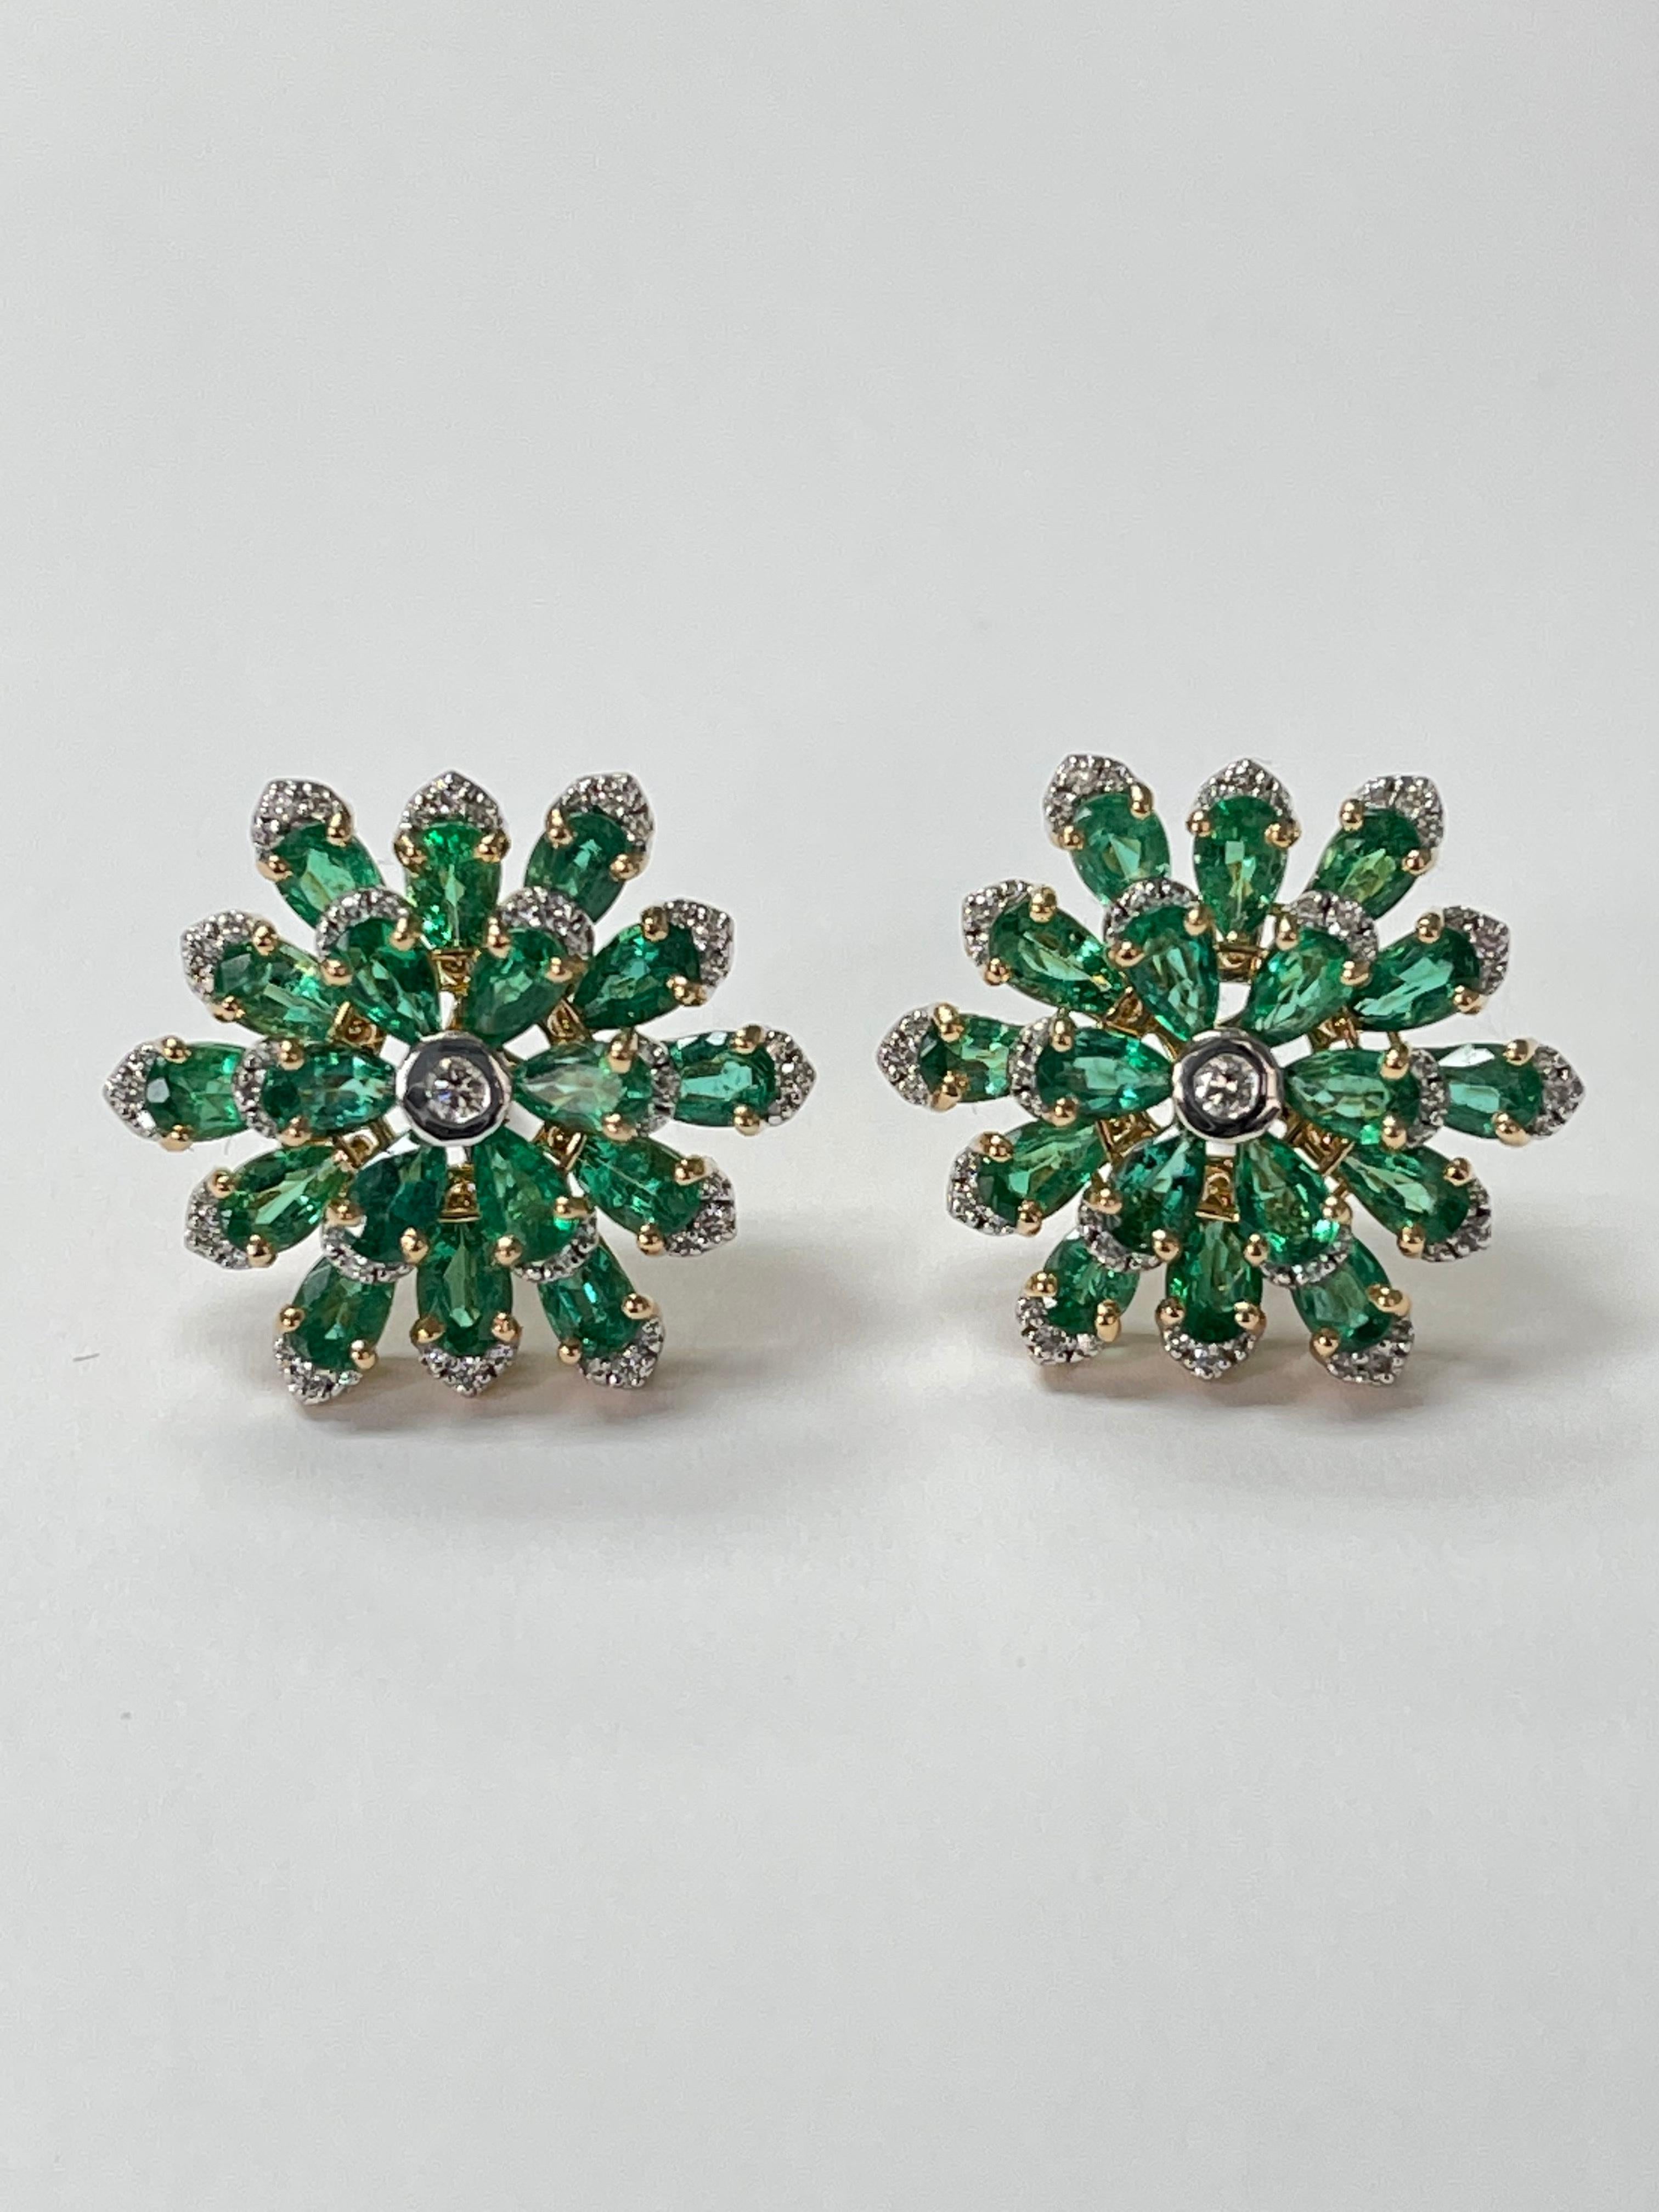 green and white stone earrings